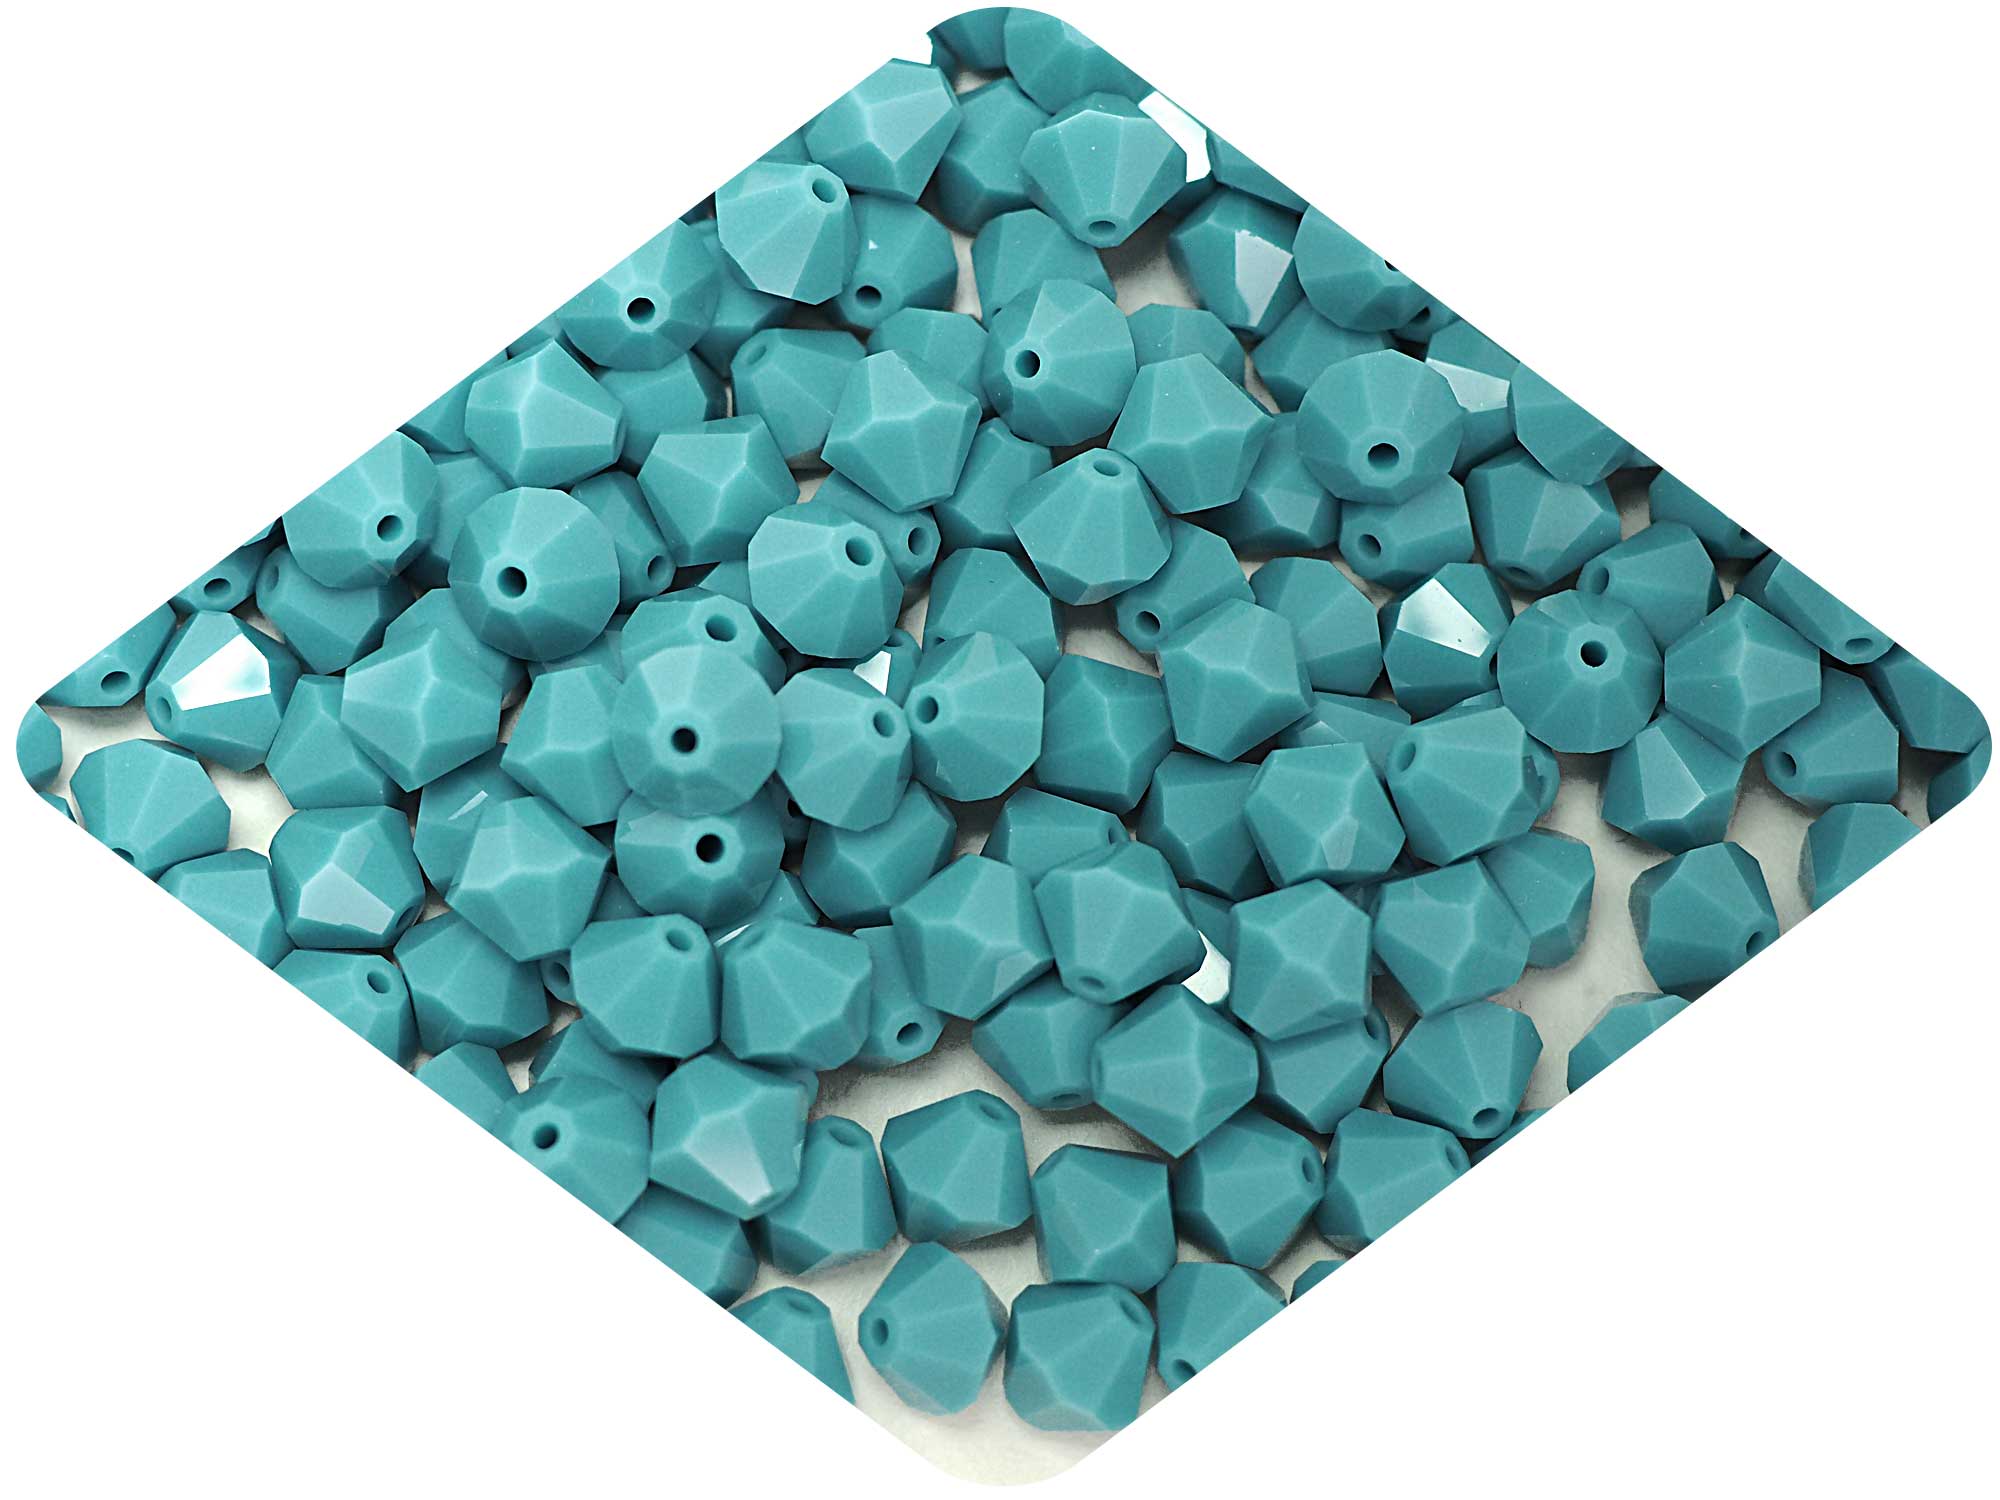 Turquoise (Preciosa color), Czech Glass Beads, Machine Cut Bicones (MC Rondell, Diamond Shape), turquoise opaque crystals